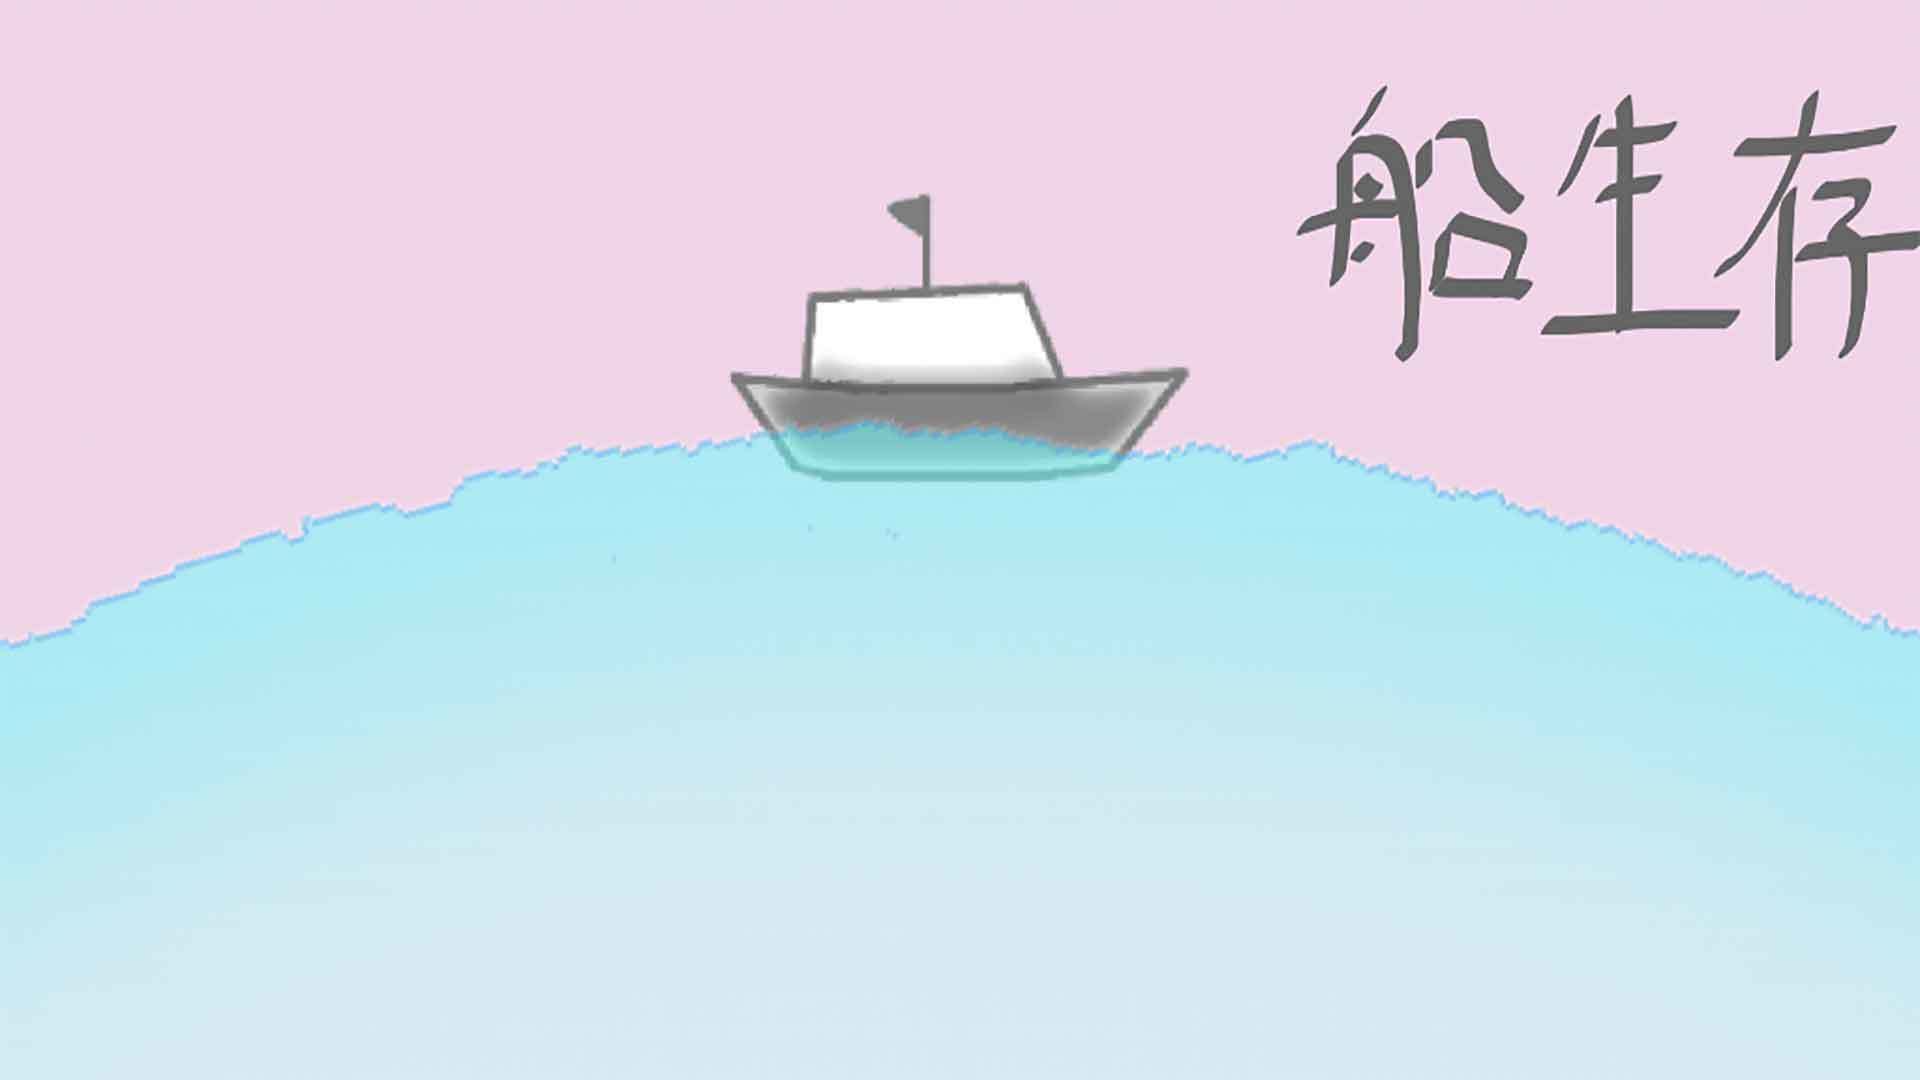 Banner of boat survival 